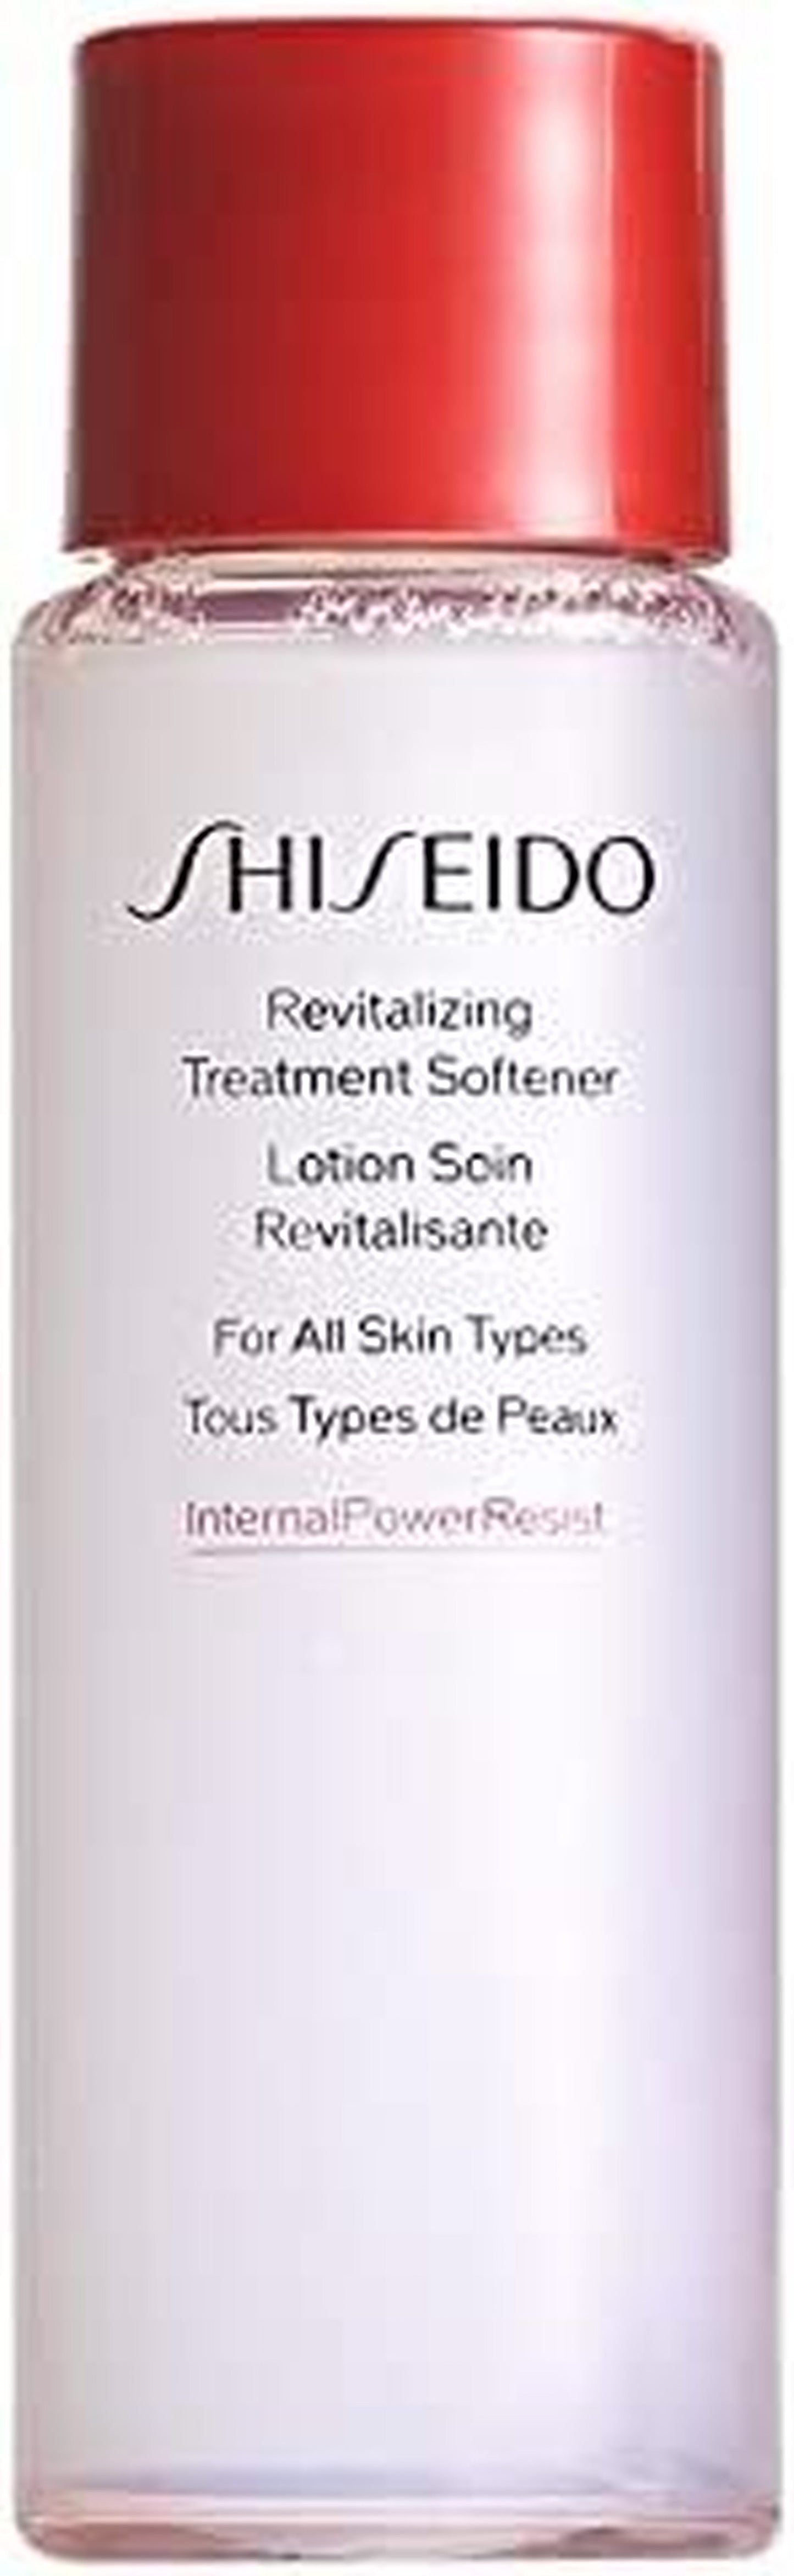 Shiseido SHISEIDO skin care RV treatment softener (medicated lotion) special size 30ml